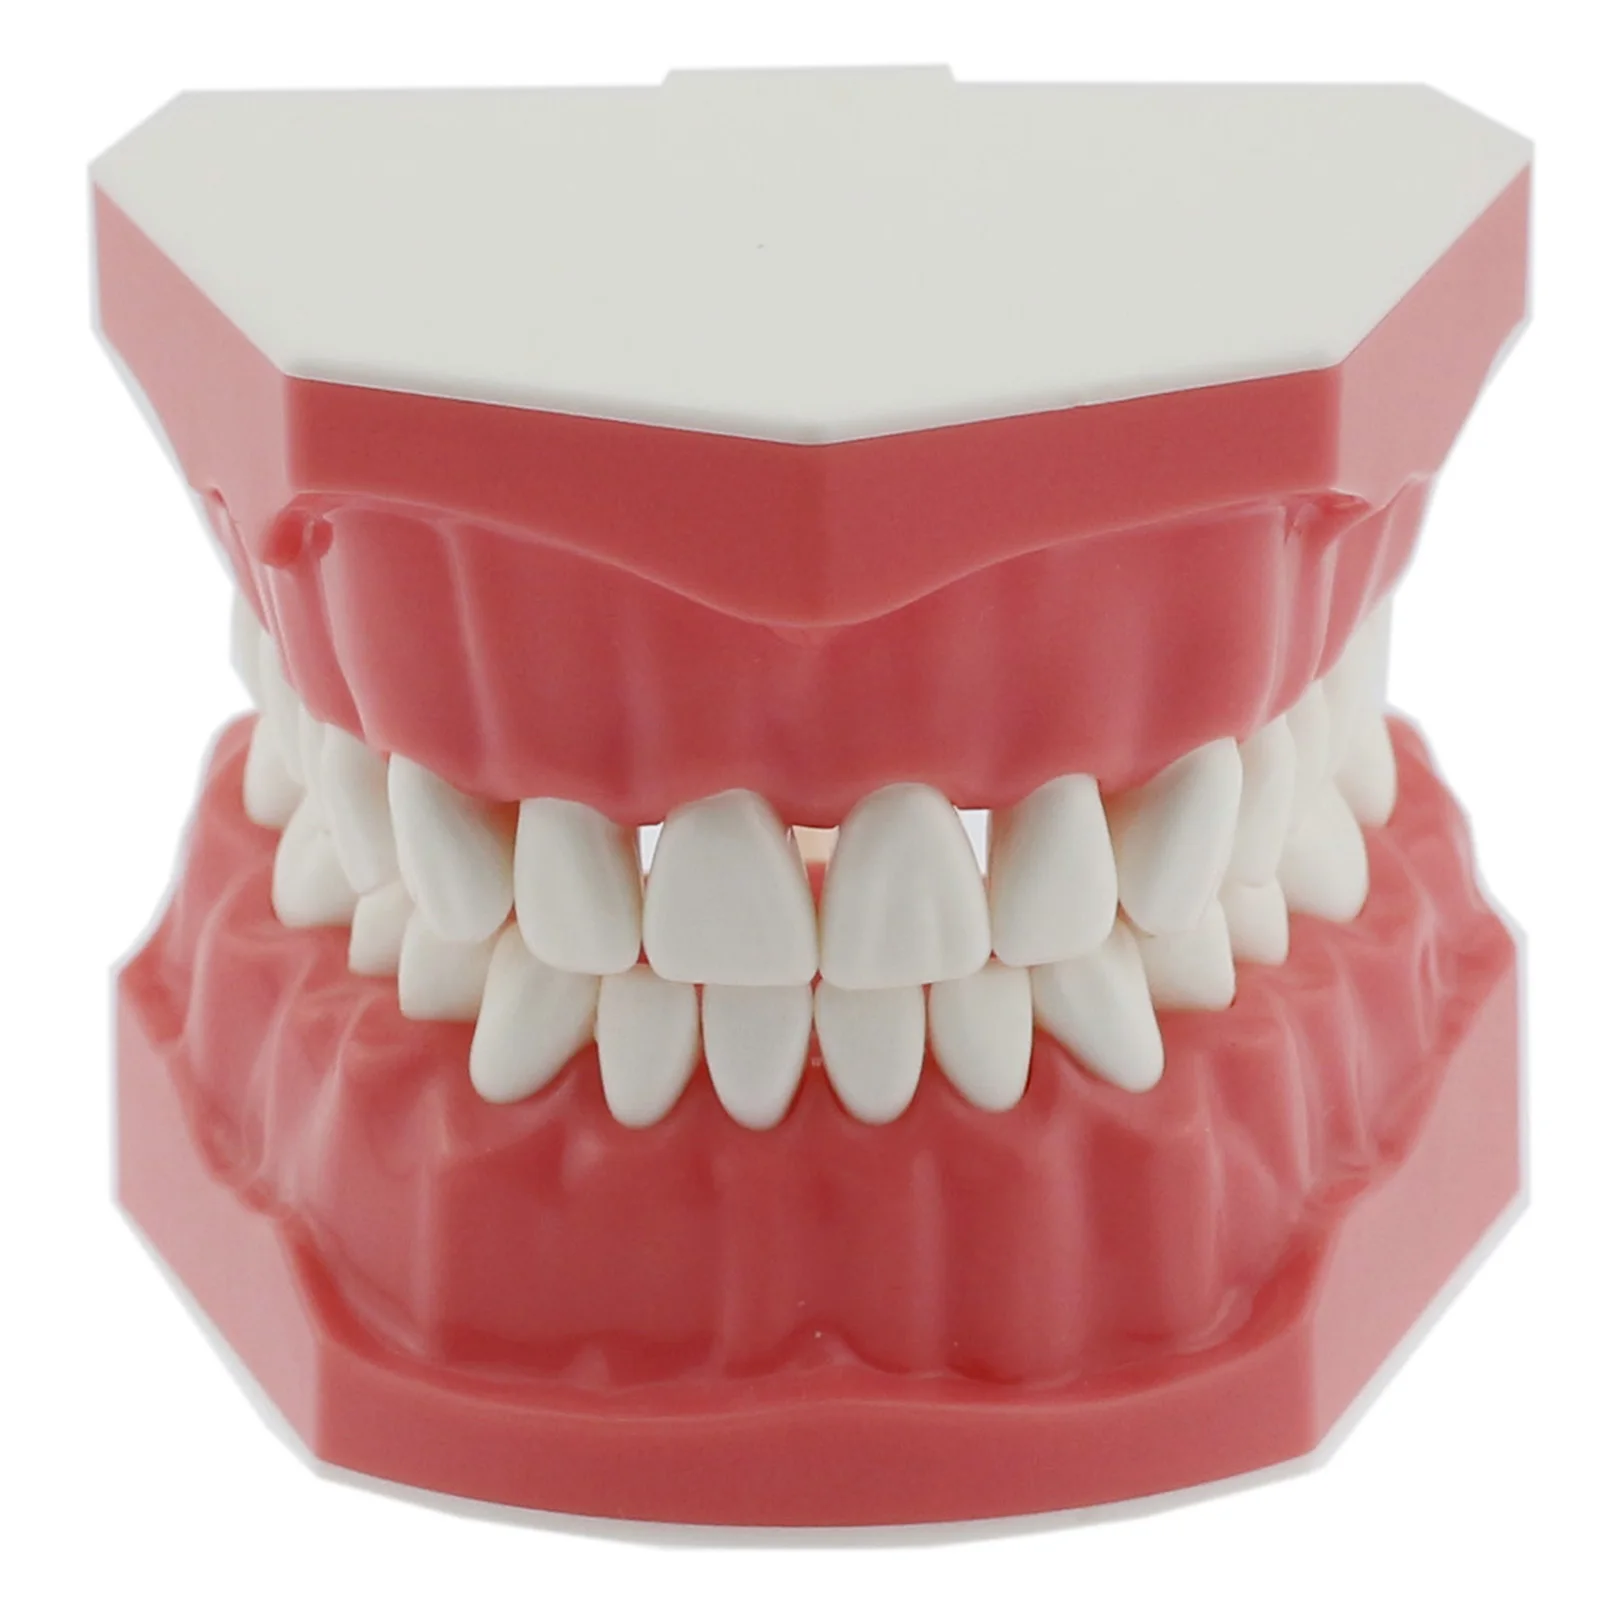 

Dental Model Brushing Flossing Practice Teeth Typodonts Model Teaching Studying M7010